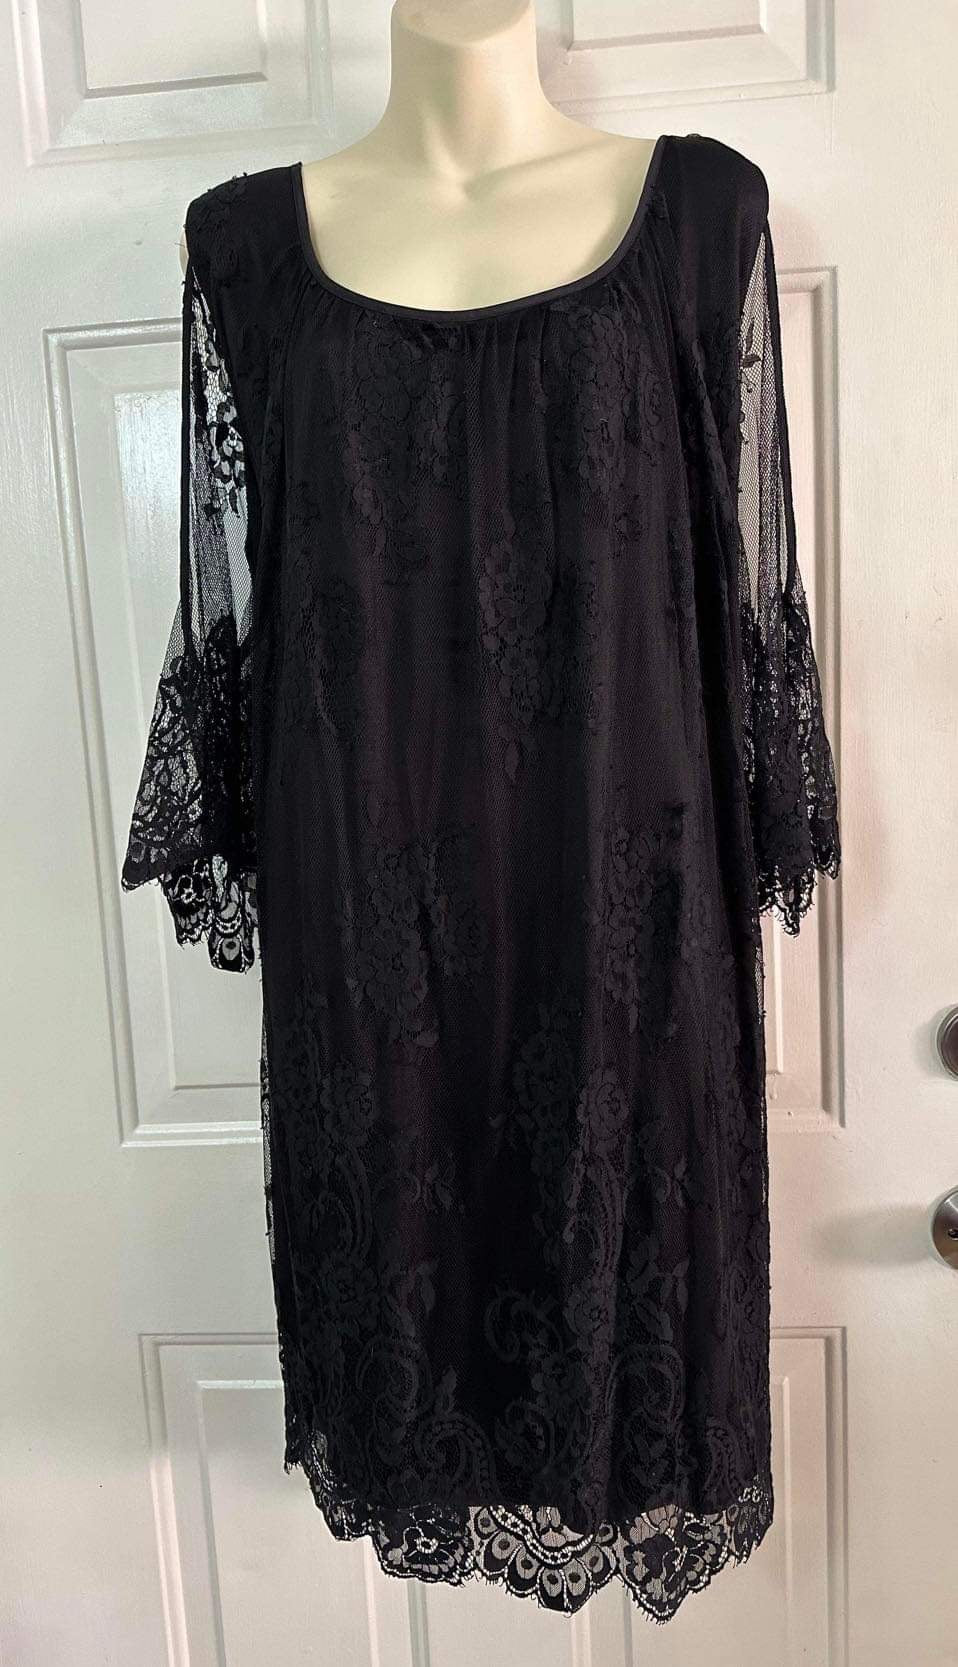 Torrid Insider Plus Size 6 Black Lace Cold Shoulder Trapeze Short Dress